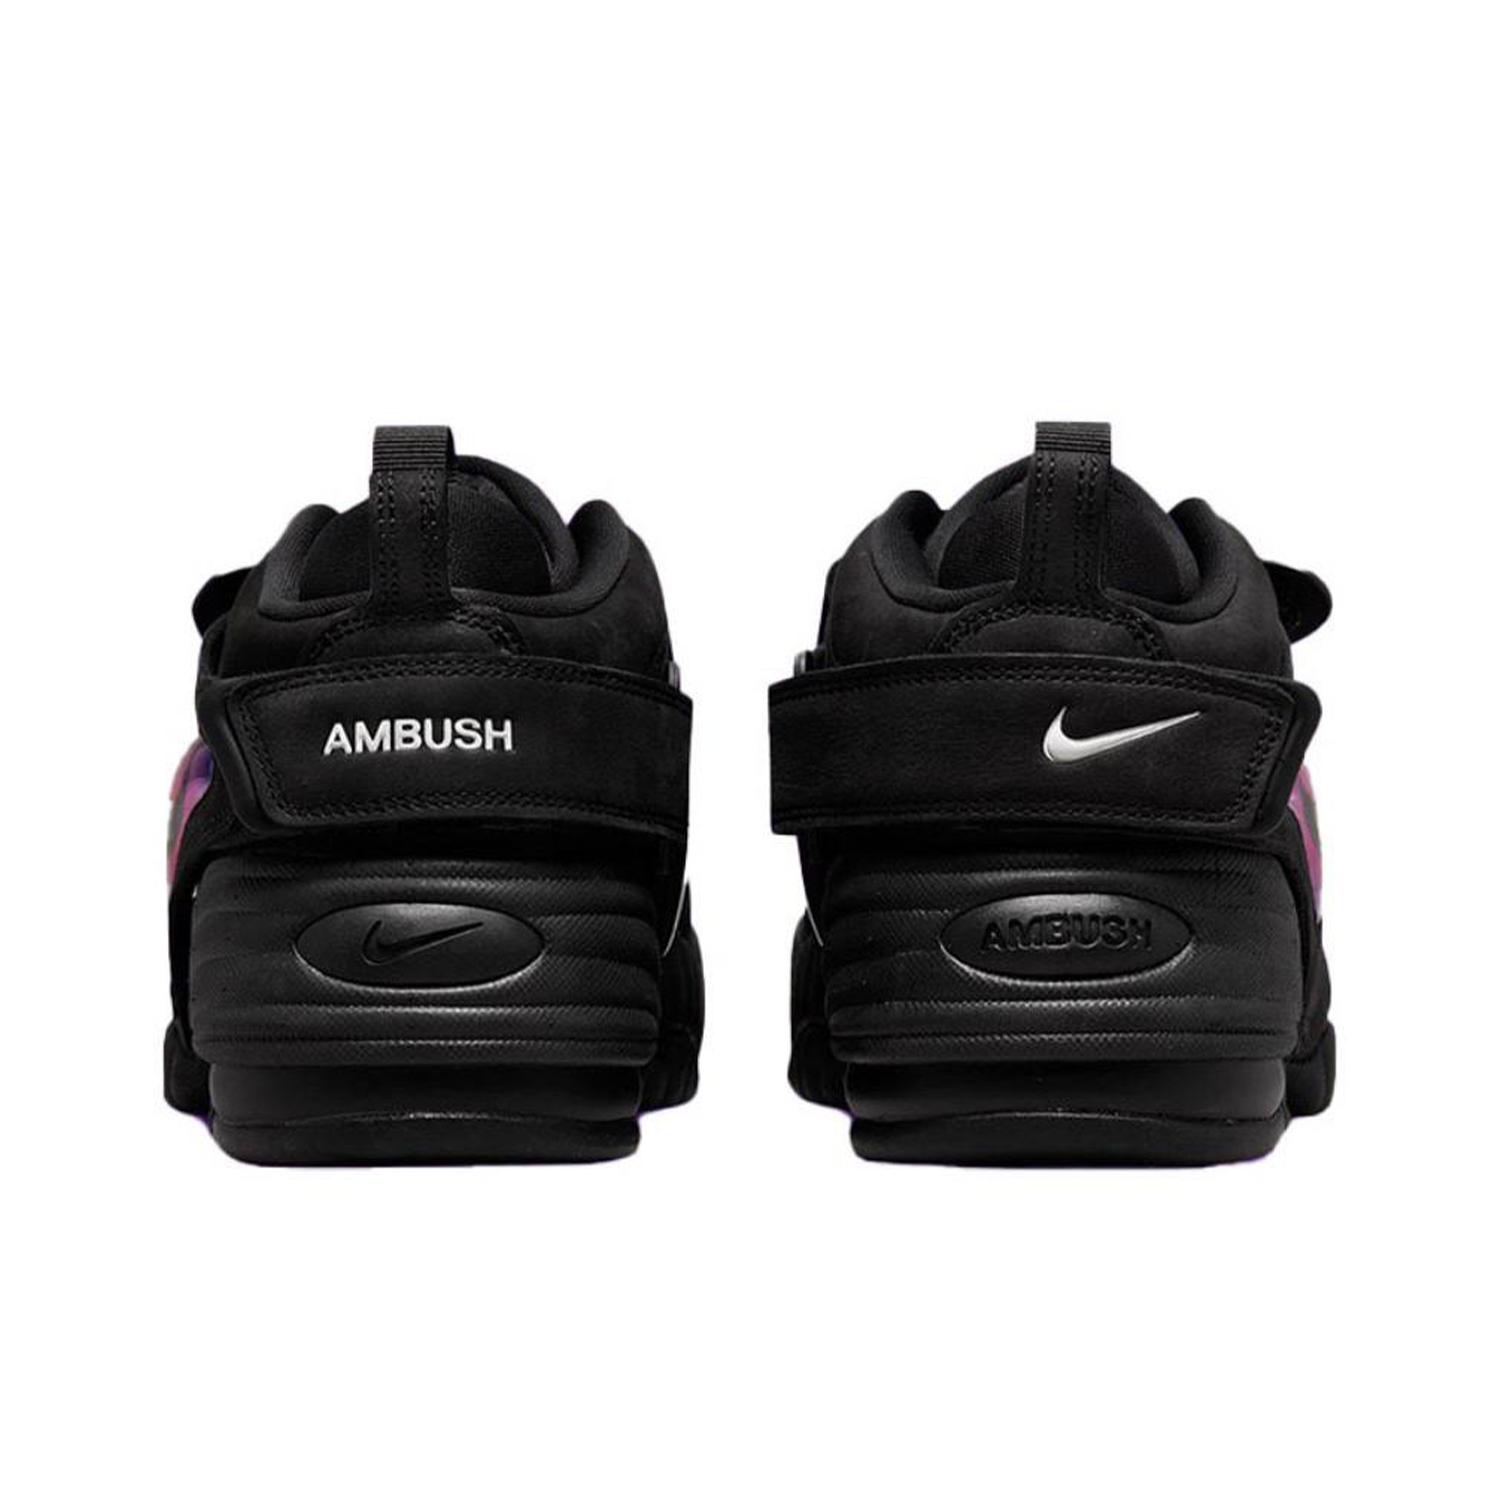 AMBUSH x Nike Air Adjust Force sp "black" (DM8465-001)